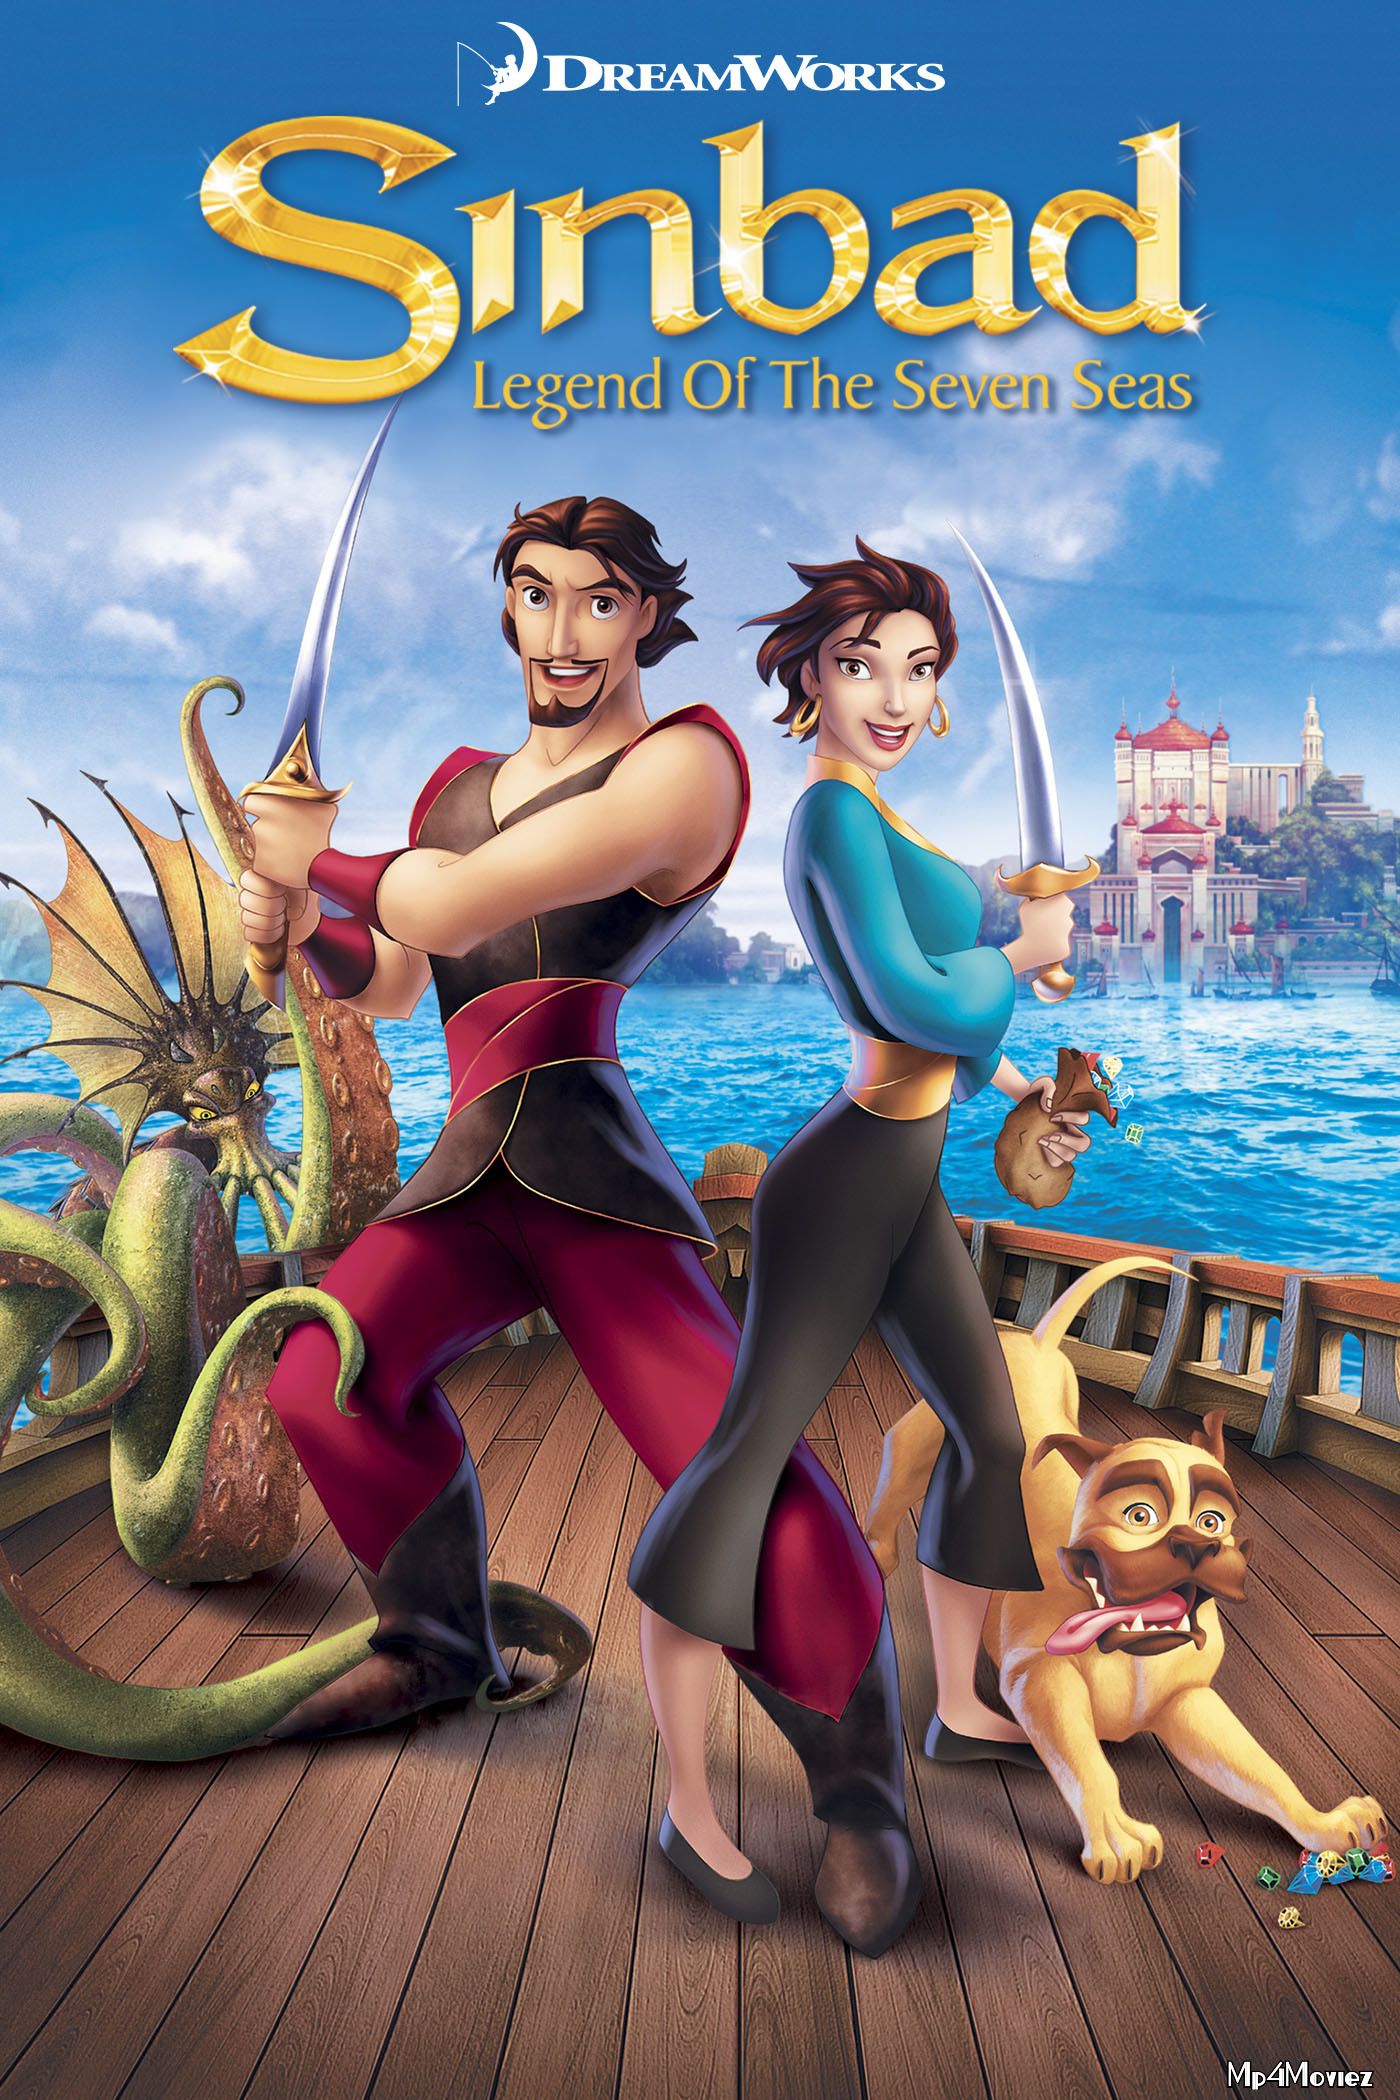 Sinbad: Legend of the Seven Seas 2003 Hindi Dubbed Full Movie download full movie